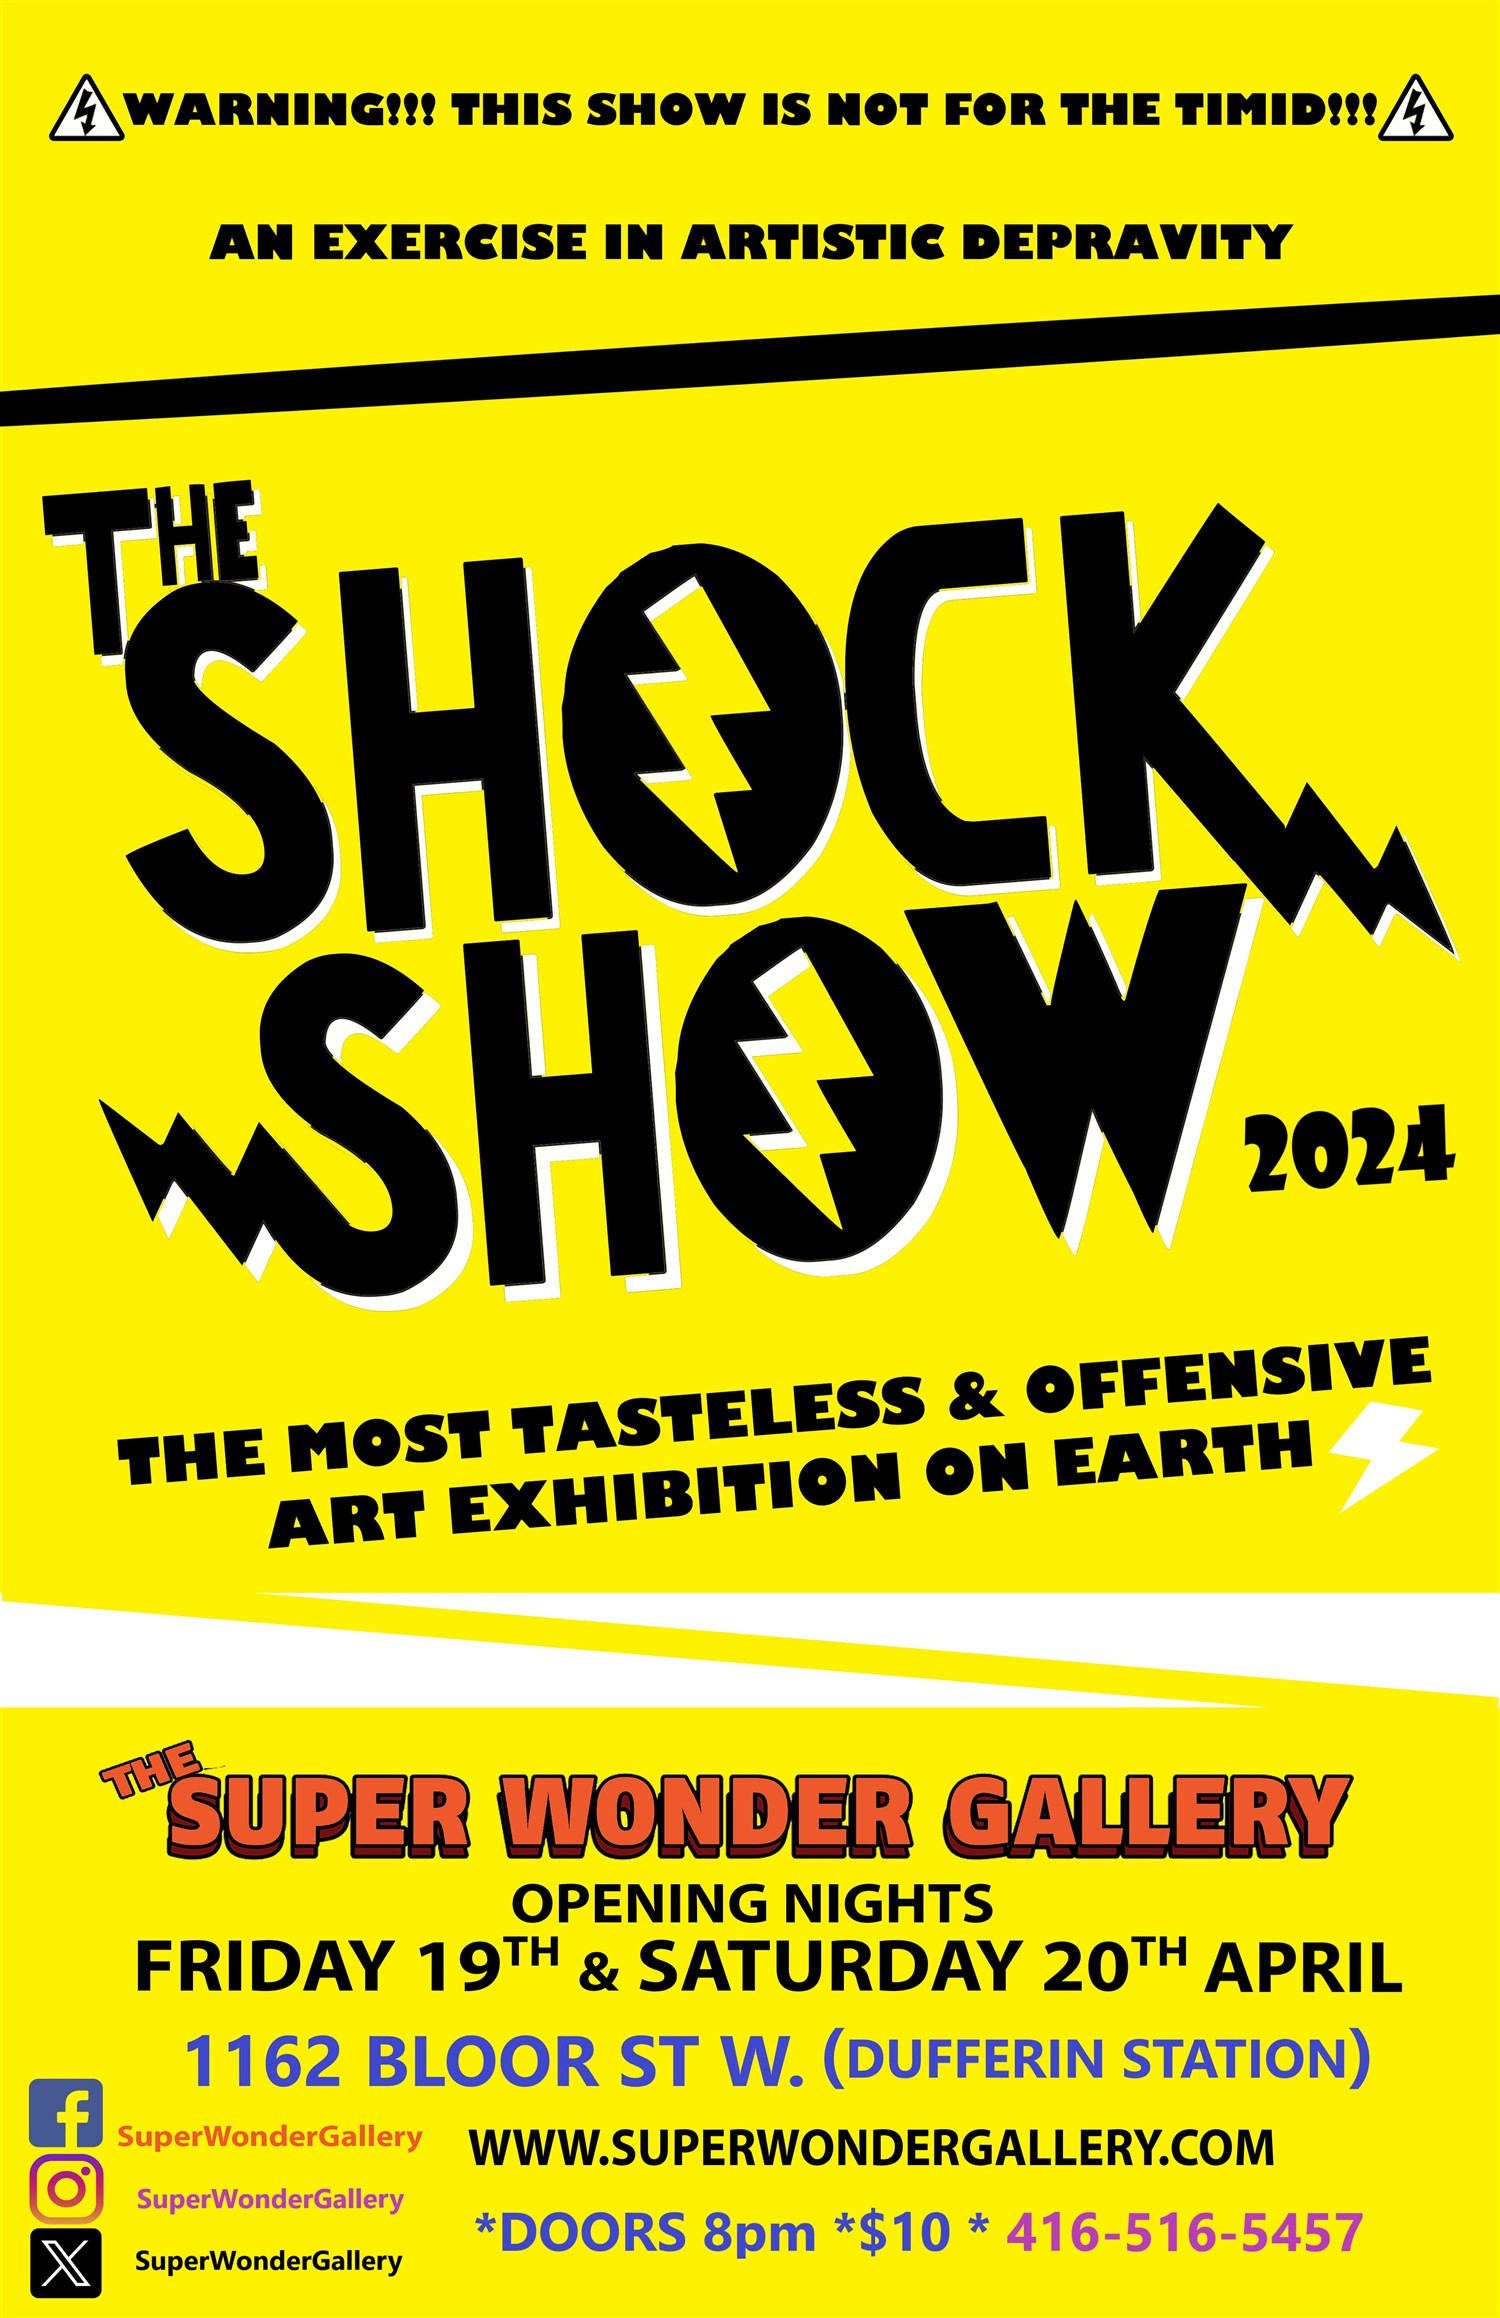 The SHOCK SHOW SATURDAY The most tasteless and offensive art exhibition on earth! on abr. 20, 20:00@SUPER WONDER GALLERY - Compra entradas y obtén información enSuper Wonder Gallery 